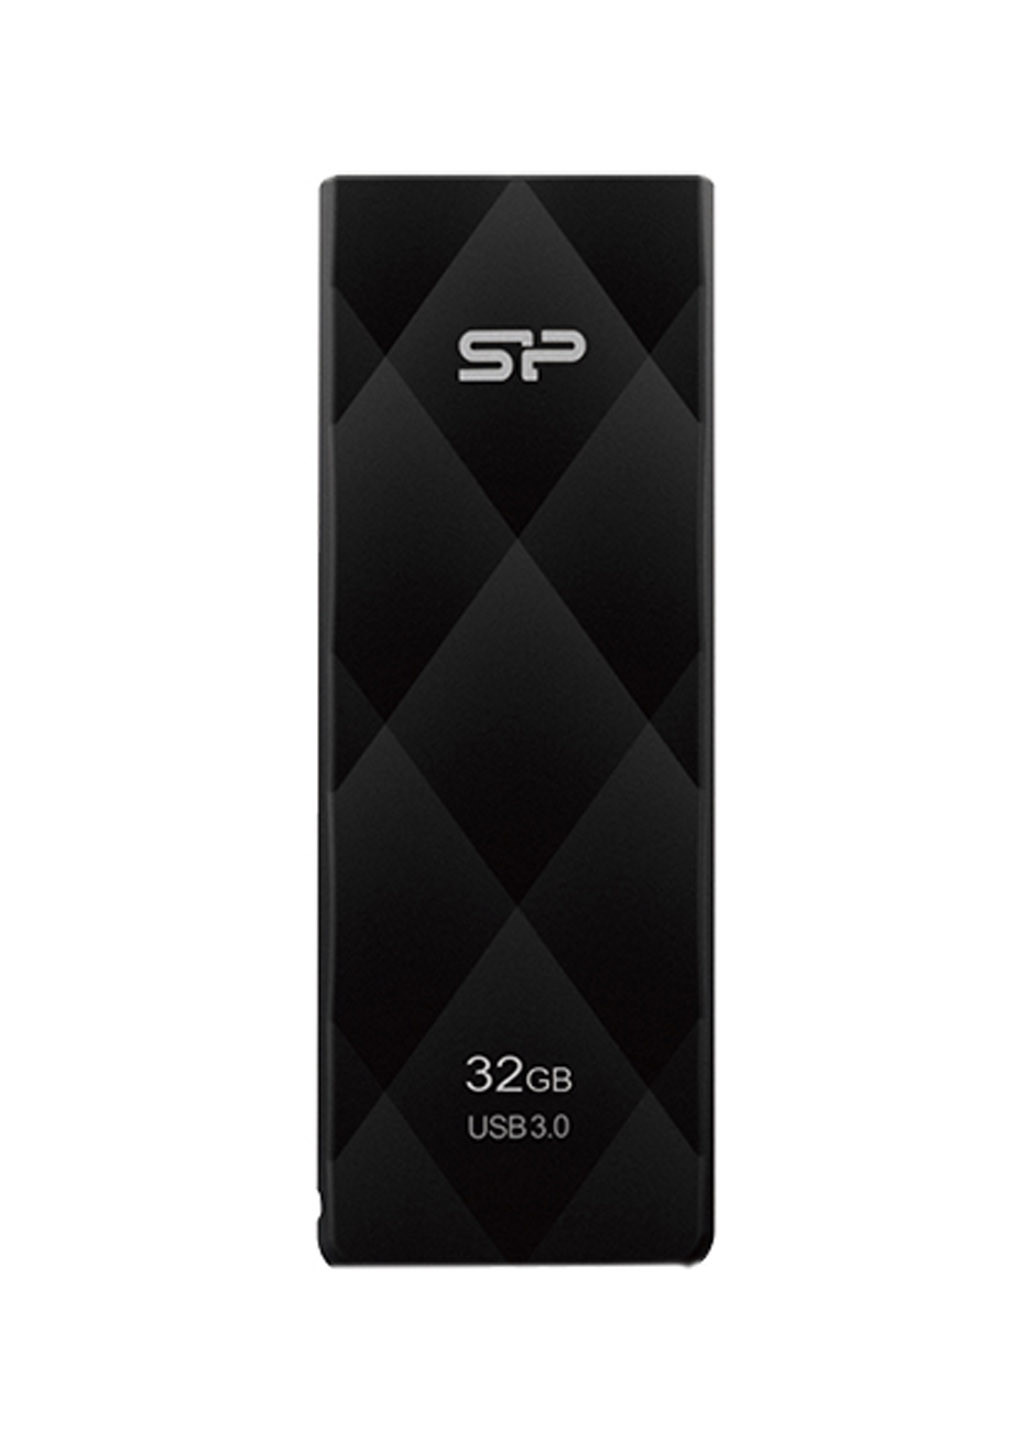 Флеш память USB Blaze B20 32GB Black (SP032GBUF3B20V1K) Silicon Power флеш память usb silicon power blaze b20 32gb black (sp032gbuf3b20v1k) (132007746)